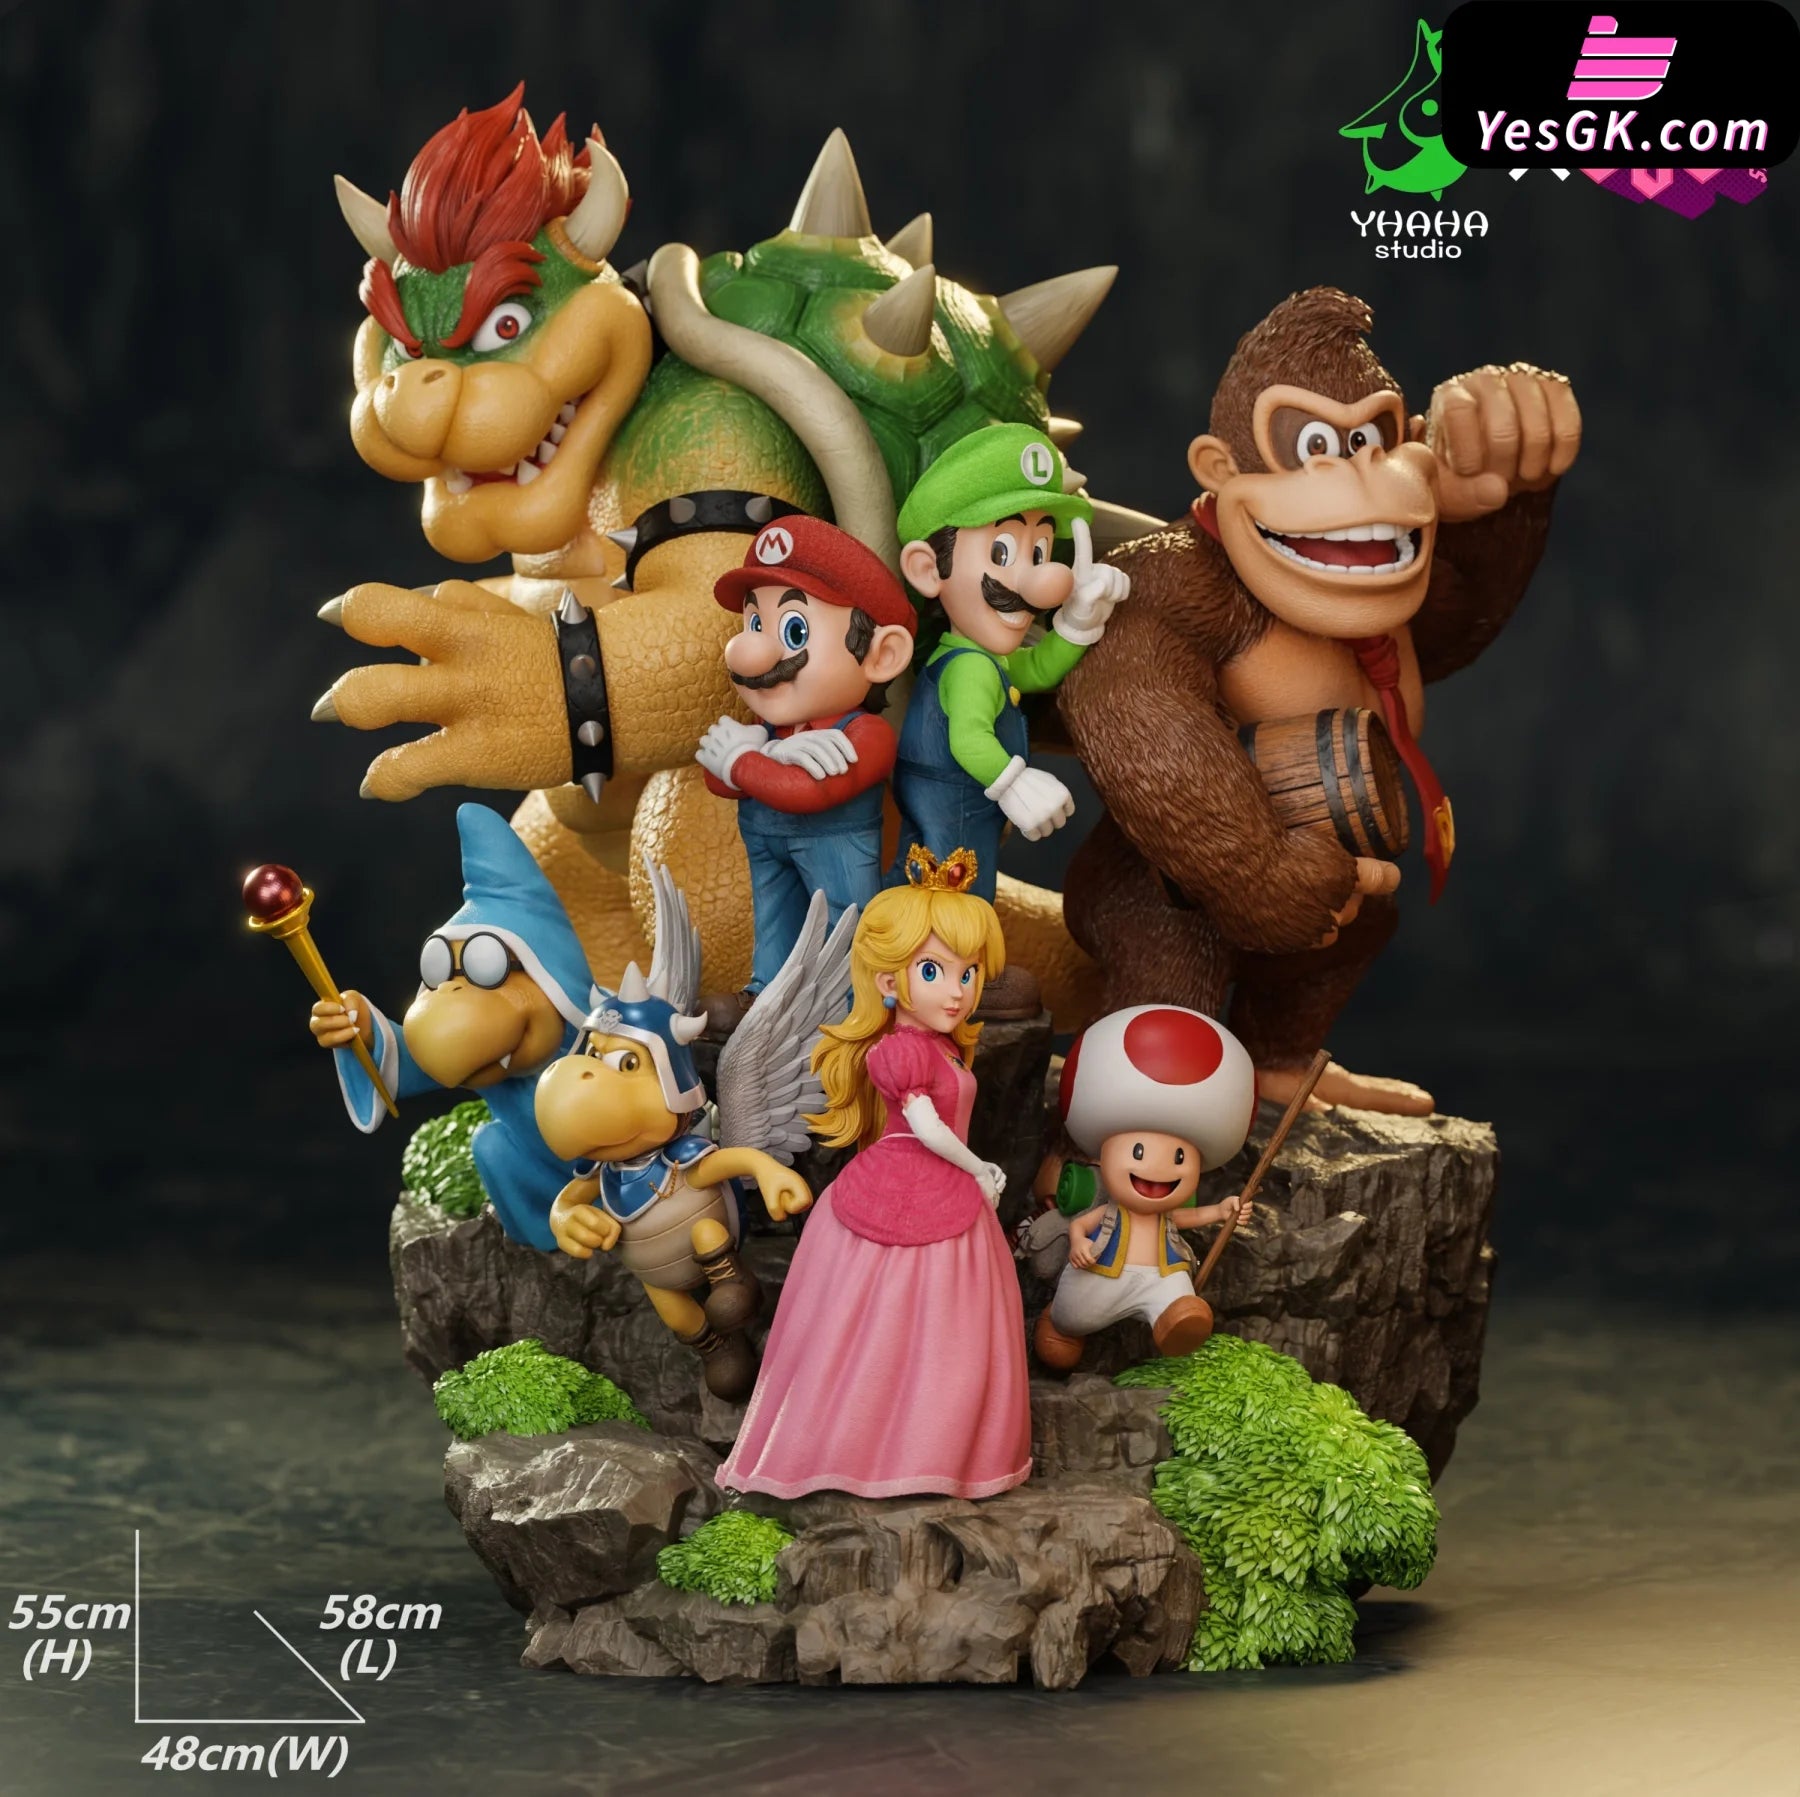 Super Mario Bros All Crew Statue - Joy Station Collectibles